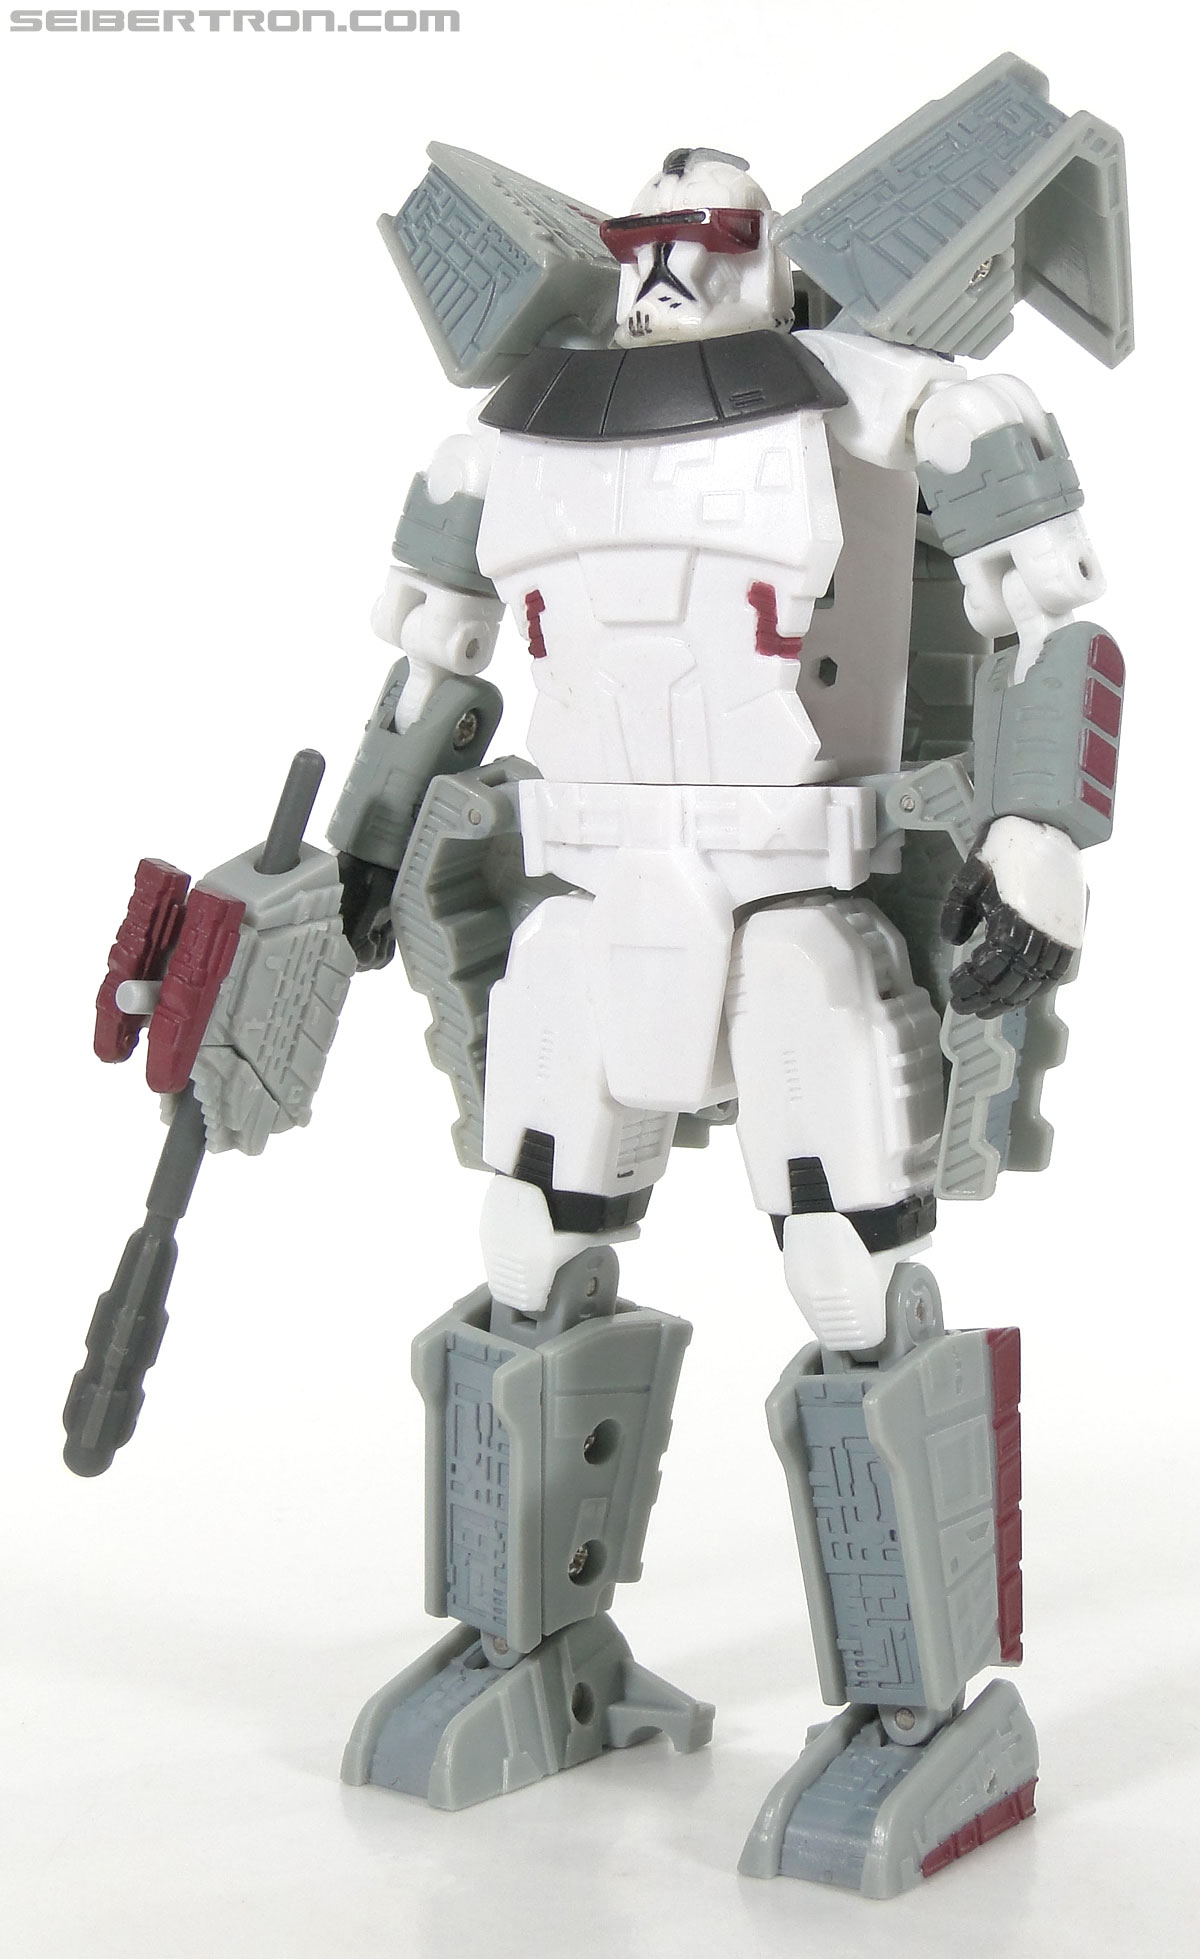 Star Wars Transformers Lieutenant Thire (Republic Attack Cruiser) (Image #55 of 76)